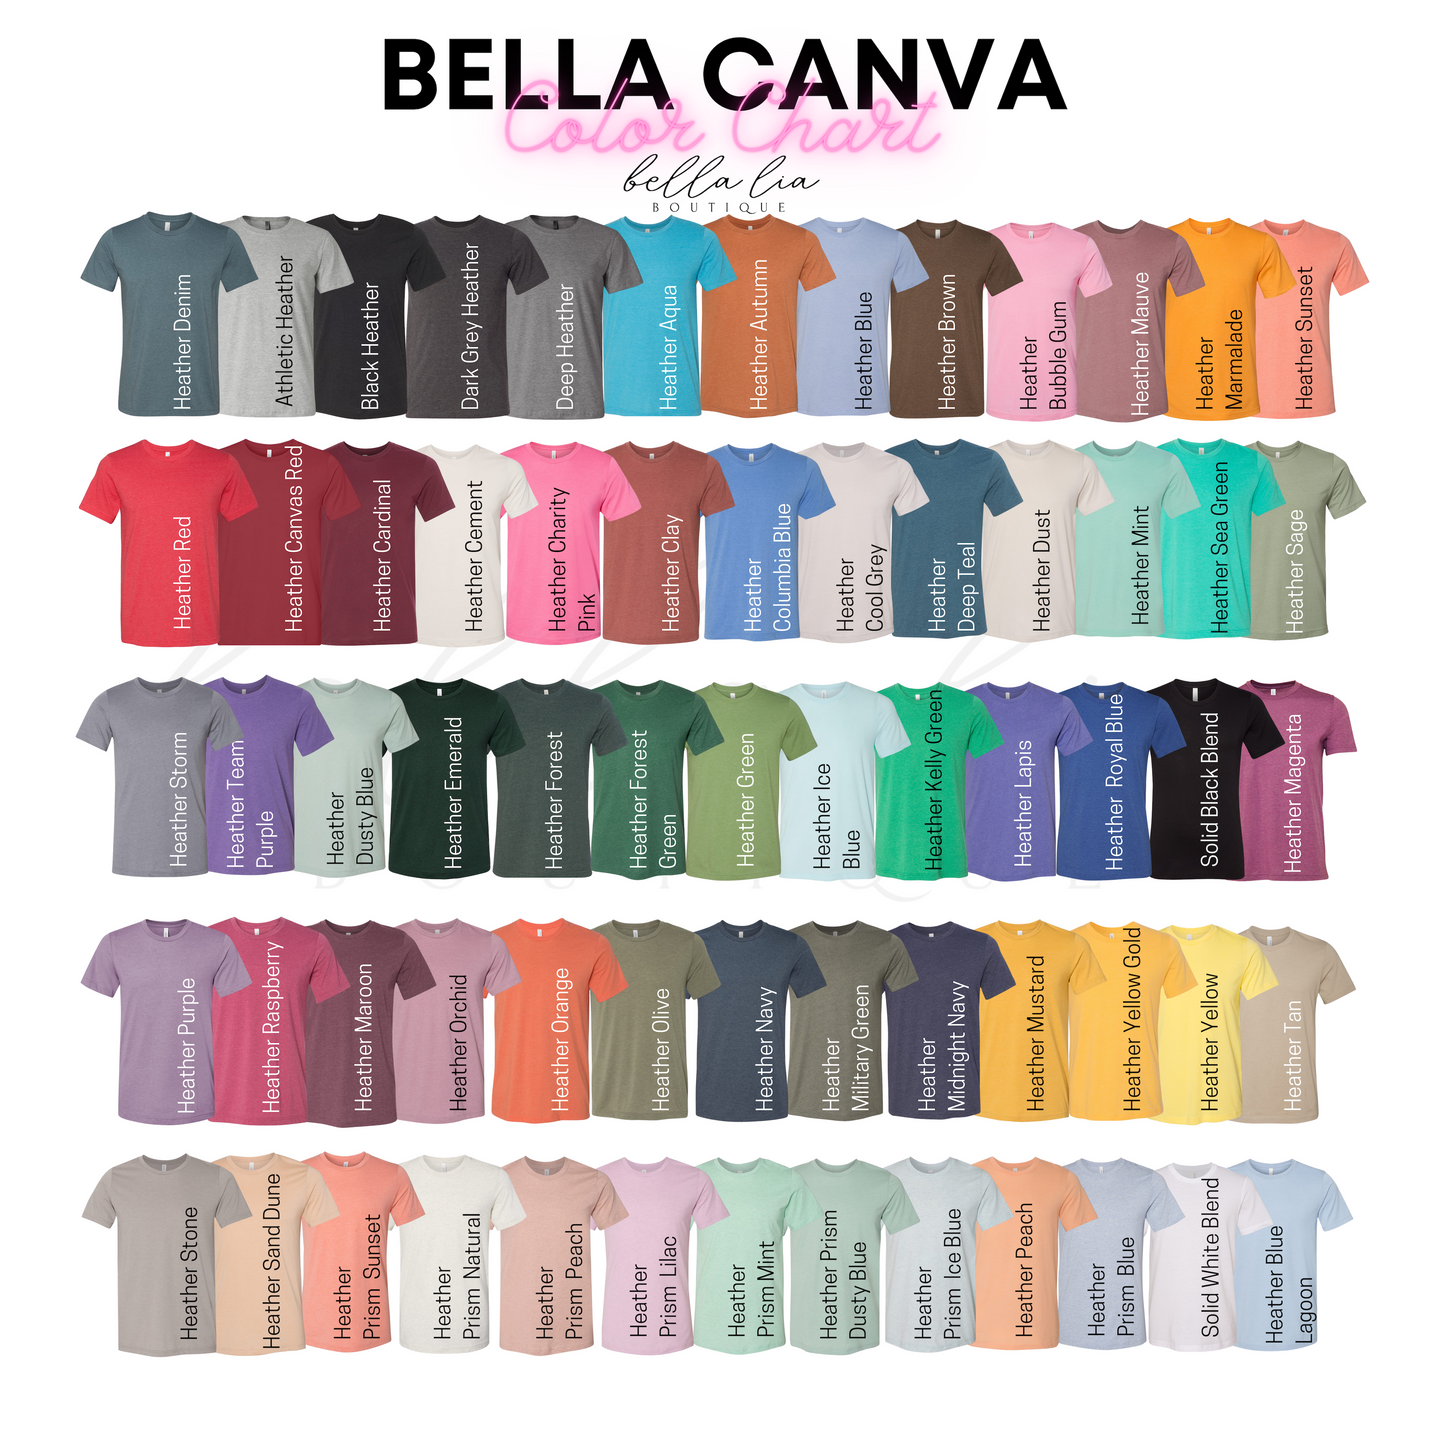 Go Little Rockstar Graphic Tee or Sweatshirt - Bella Lia Boutique